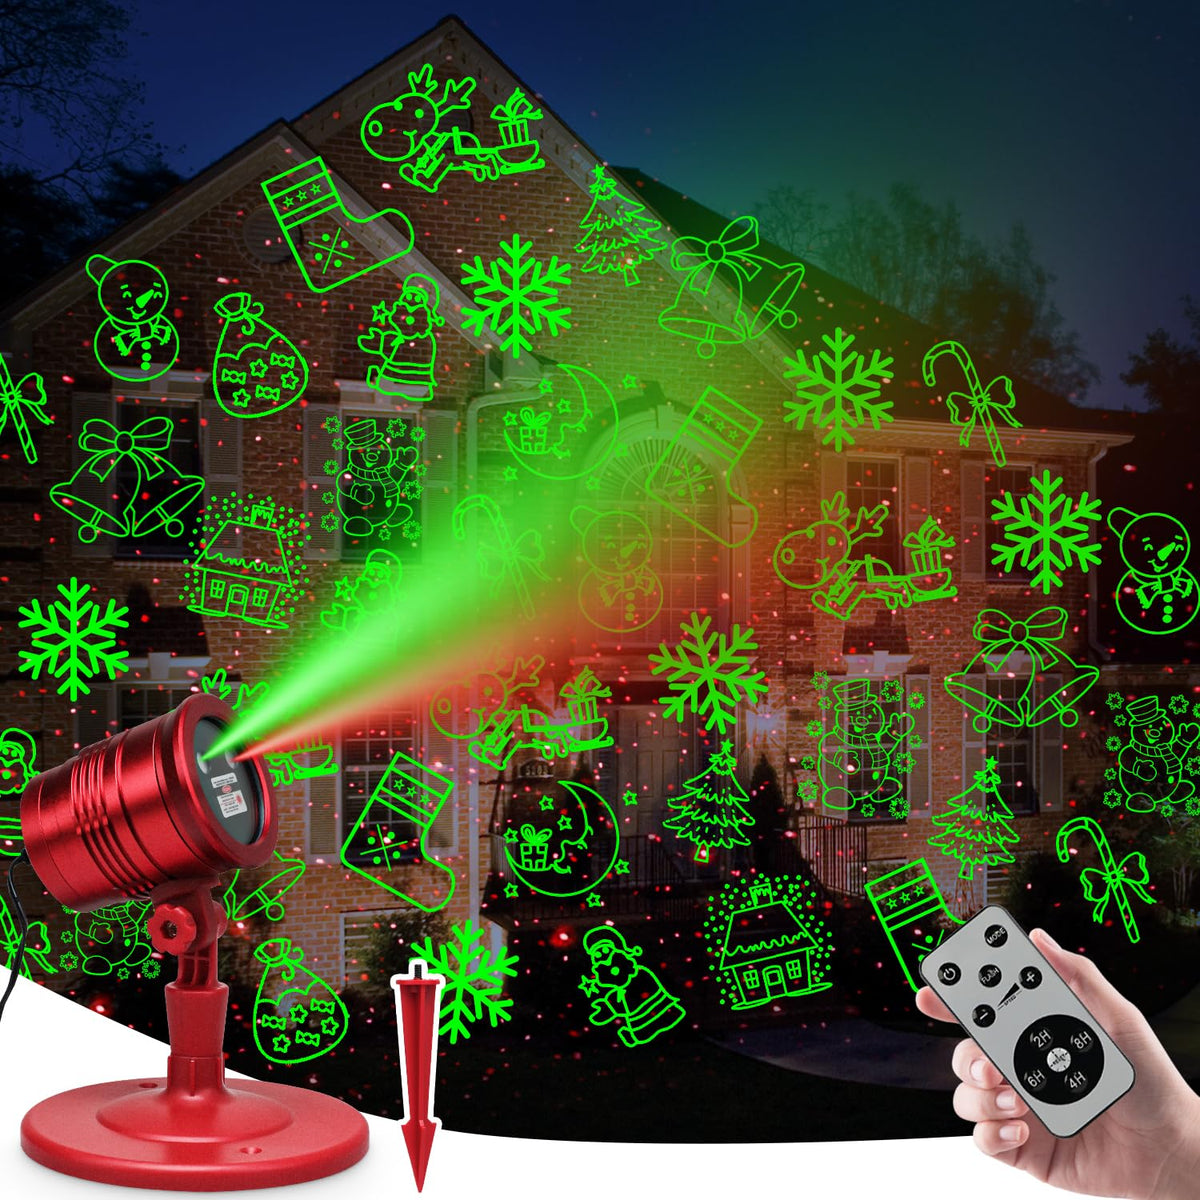 itoeo Christmas Snowflake Projector Lights Outdoor Led Snowfall